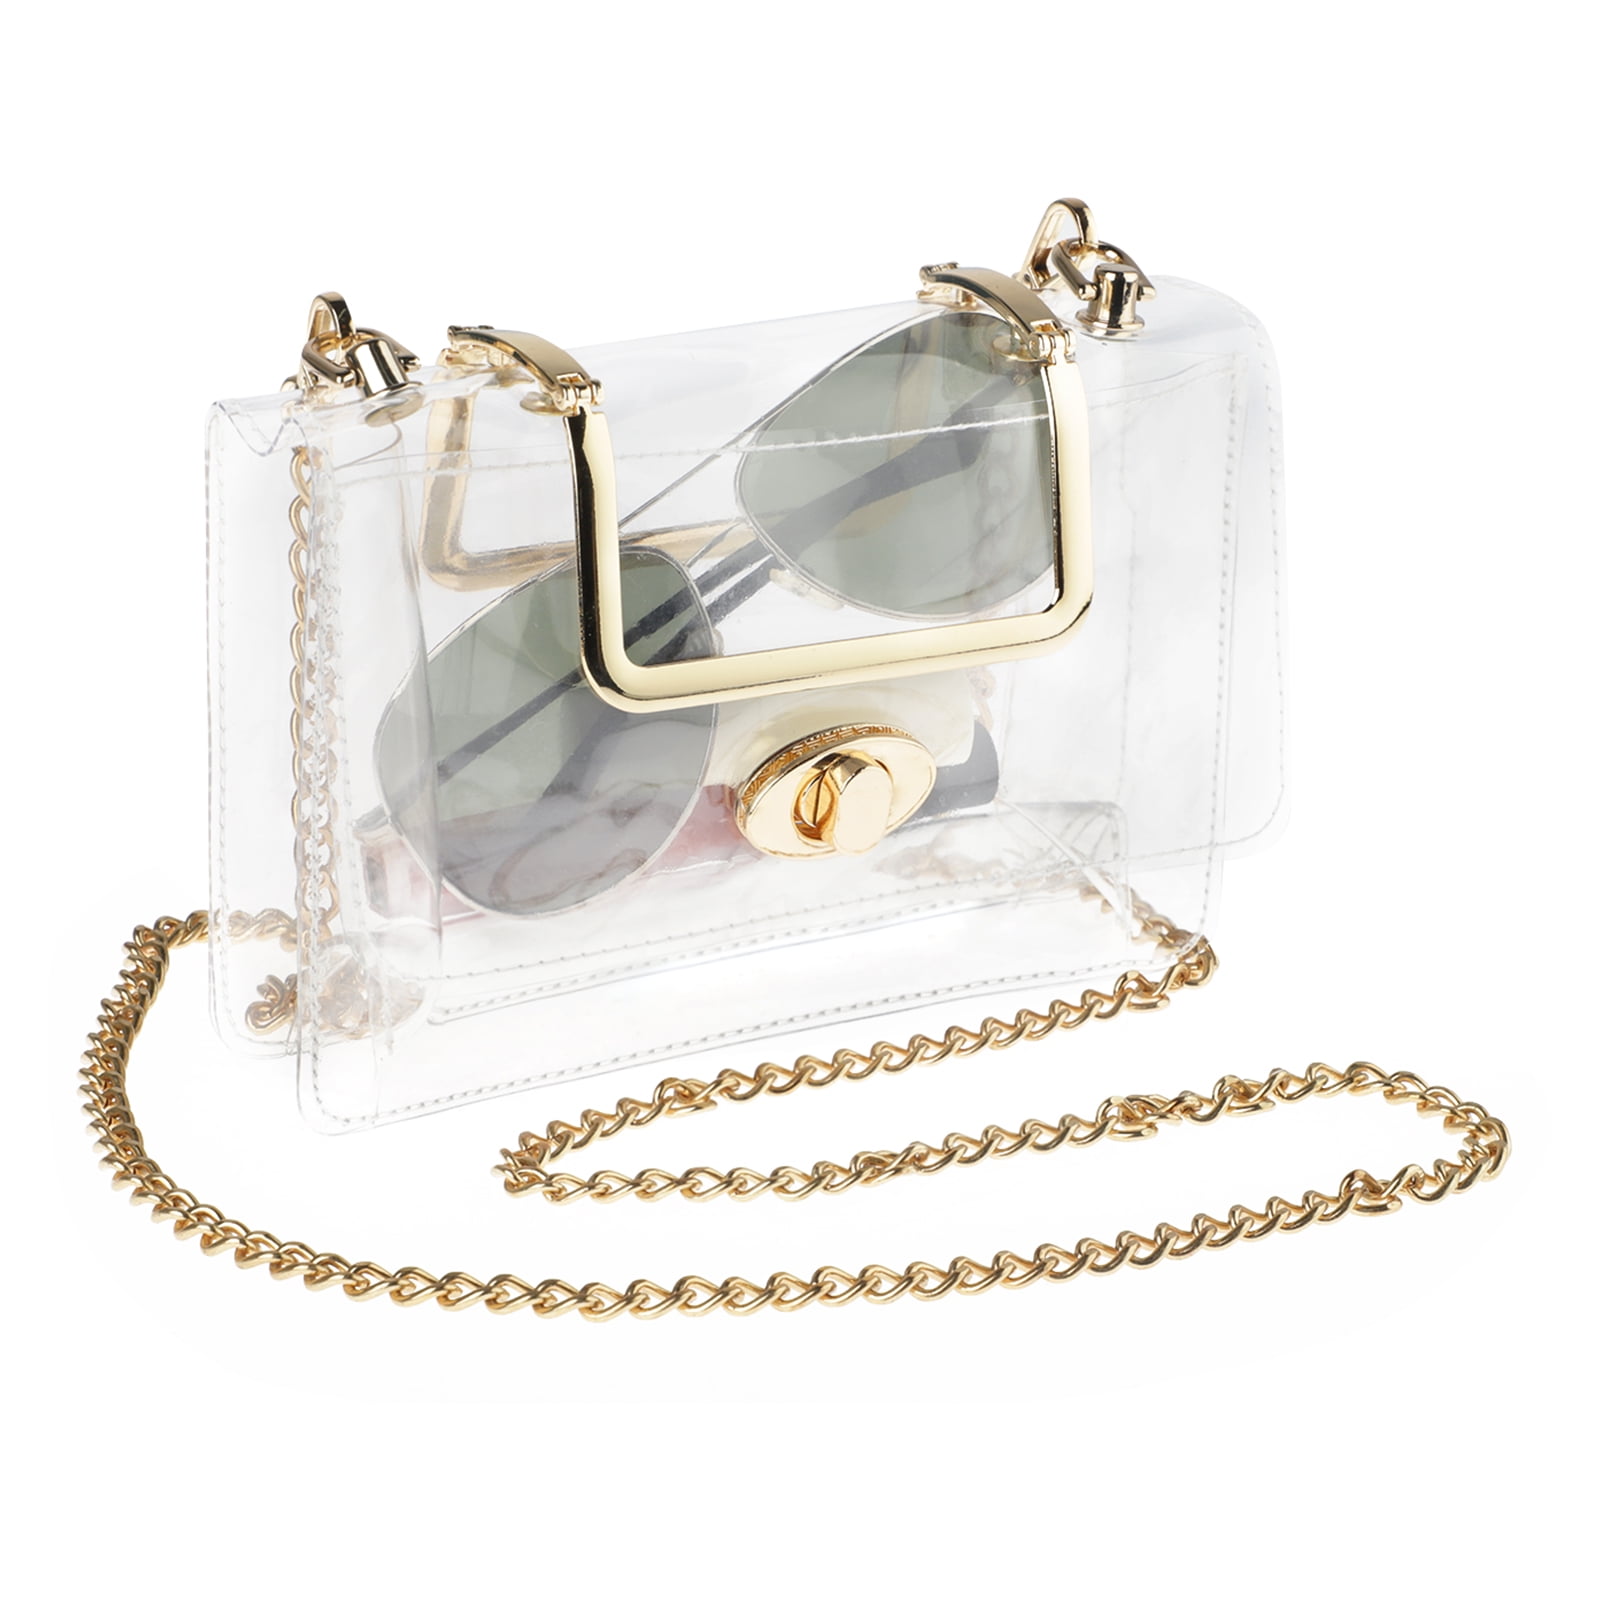 The Transparent Clutch Purse | Acrylic Bag See Through | Box Paris Clutch  Bag Gold Chain - ClutchToteBags.com